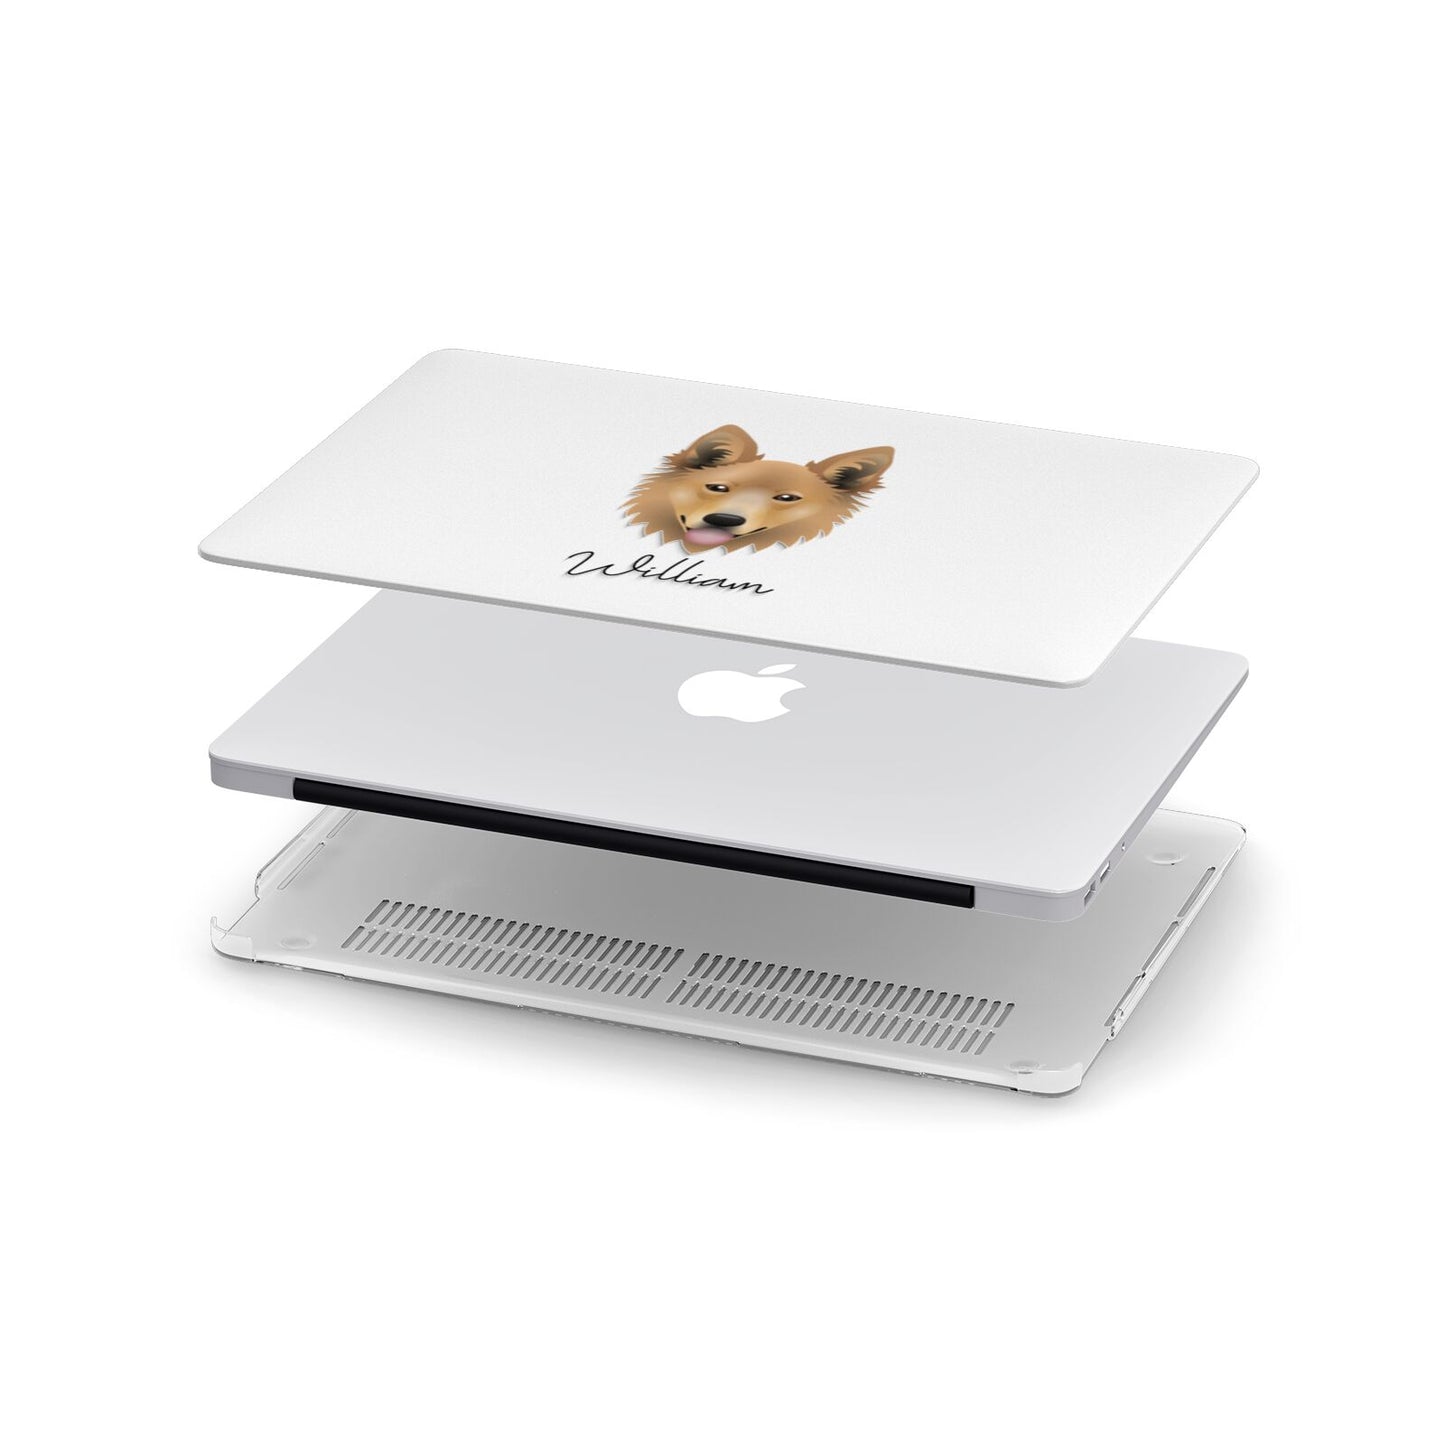 Golden Shepherd Personalised Apple MacBook Case in Detail